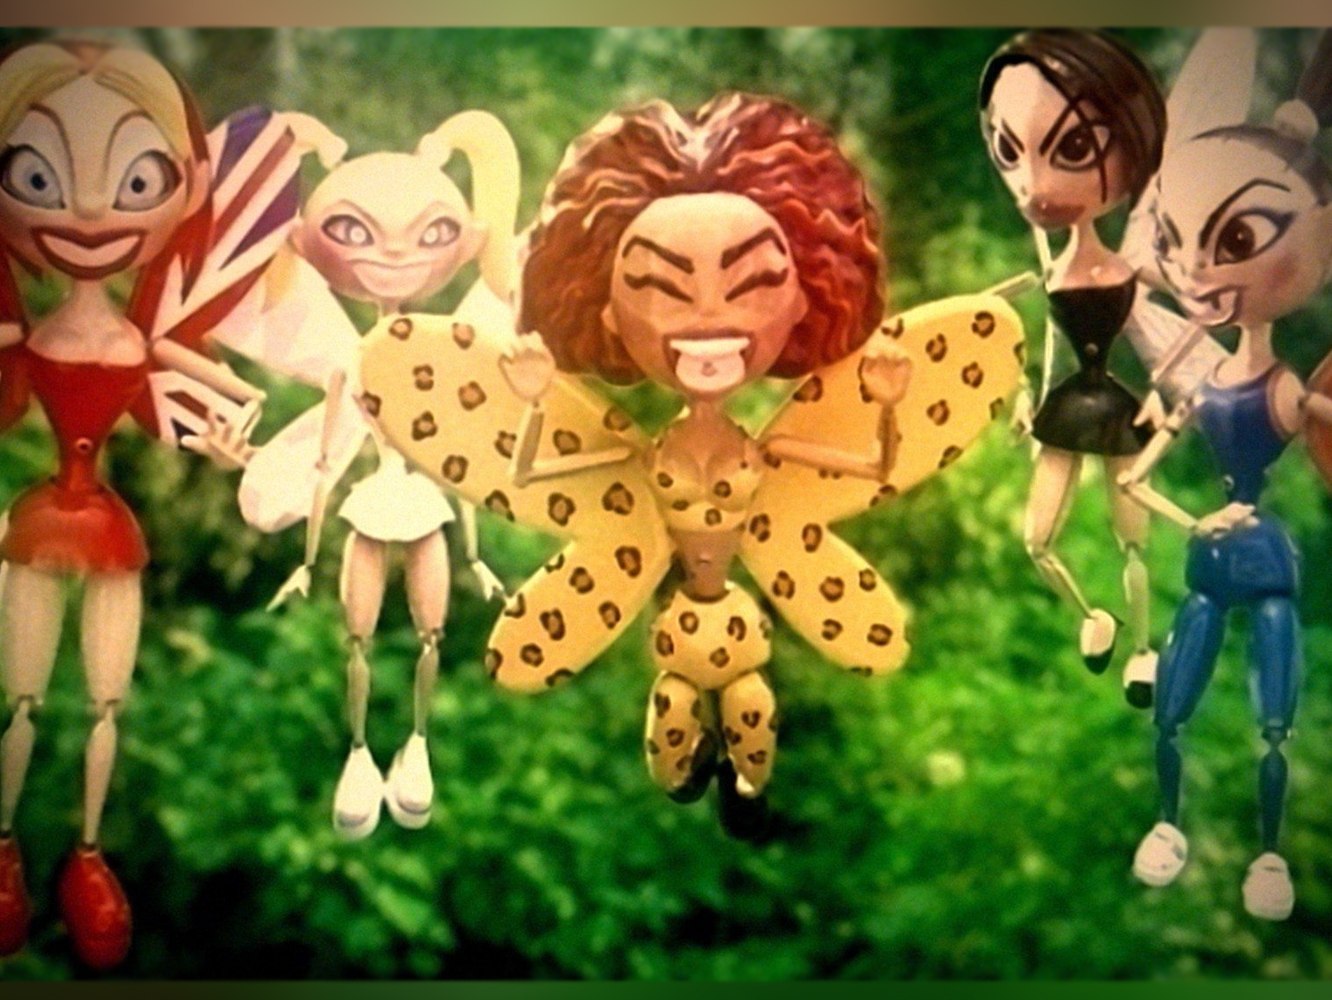  Spice Girls osan cambiar el final del vídeo de  ‘Viva Forever’